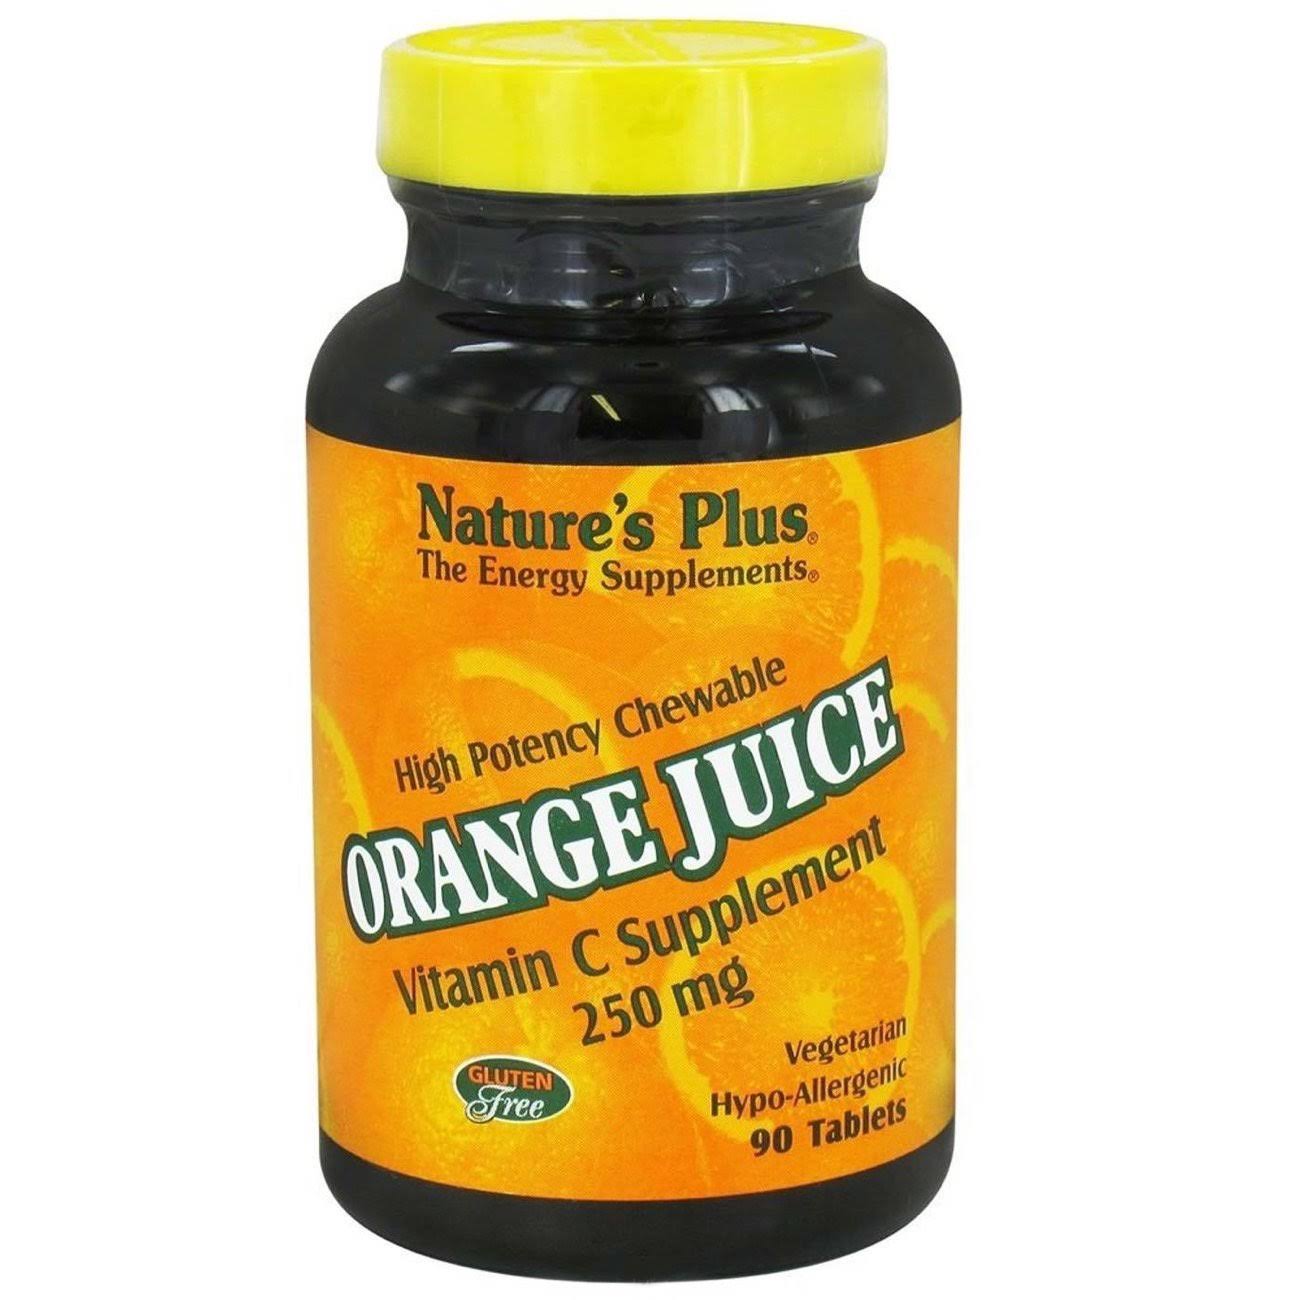 Nature's Plus Orange Juice Vitamin C - 250 mg, 90 chewable tablets